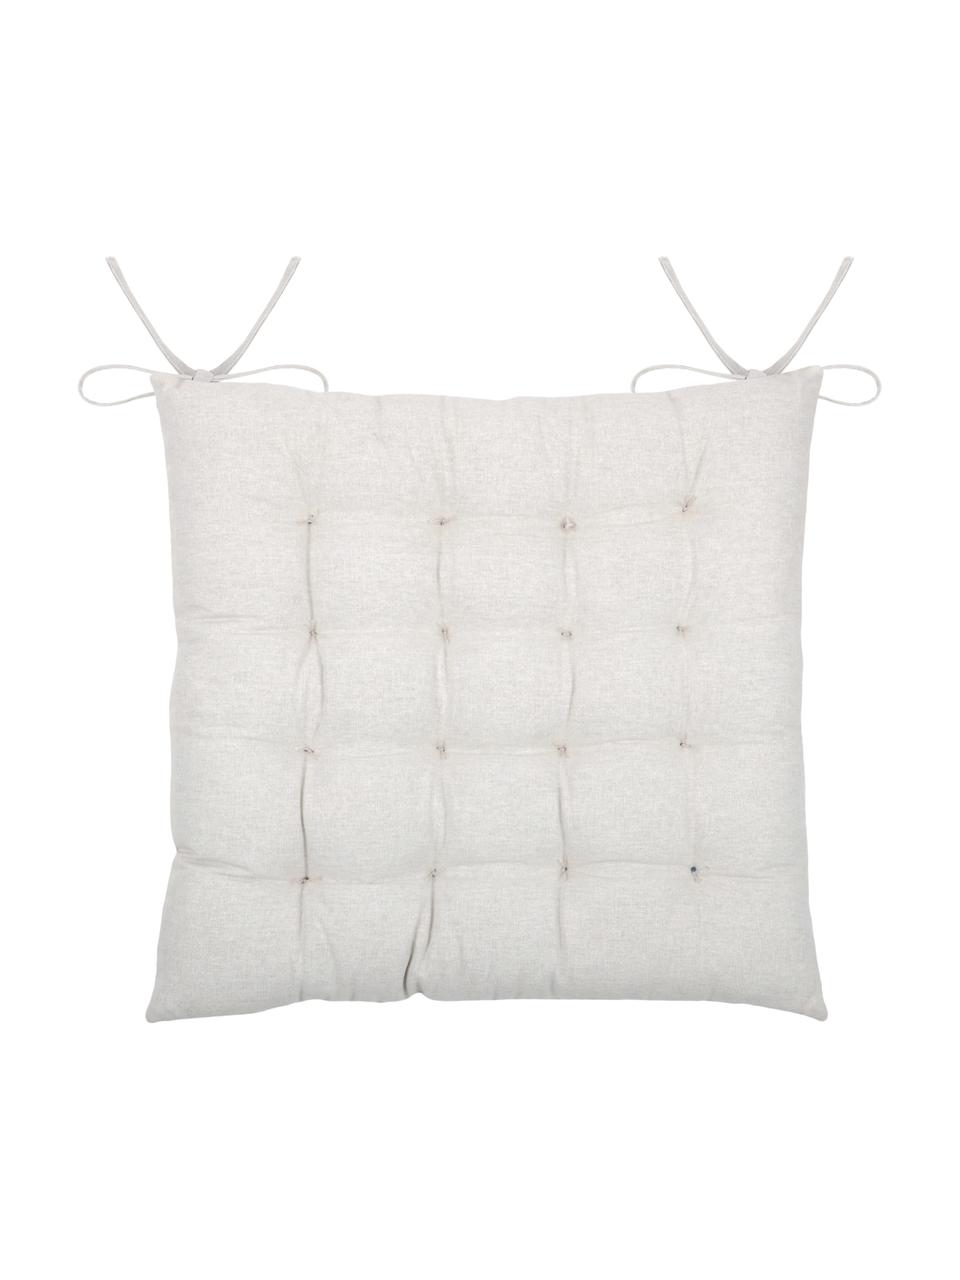 Cojín de asiento Gopher, Funda: 100% algodón, Blanco, An 40 x L 40 cm